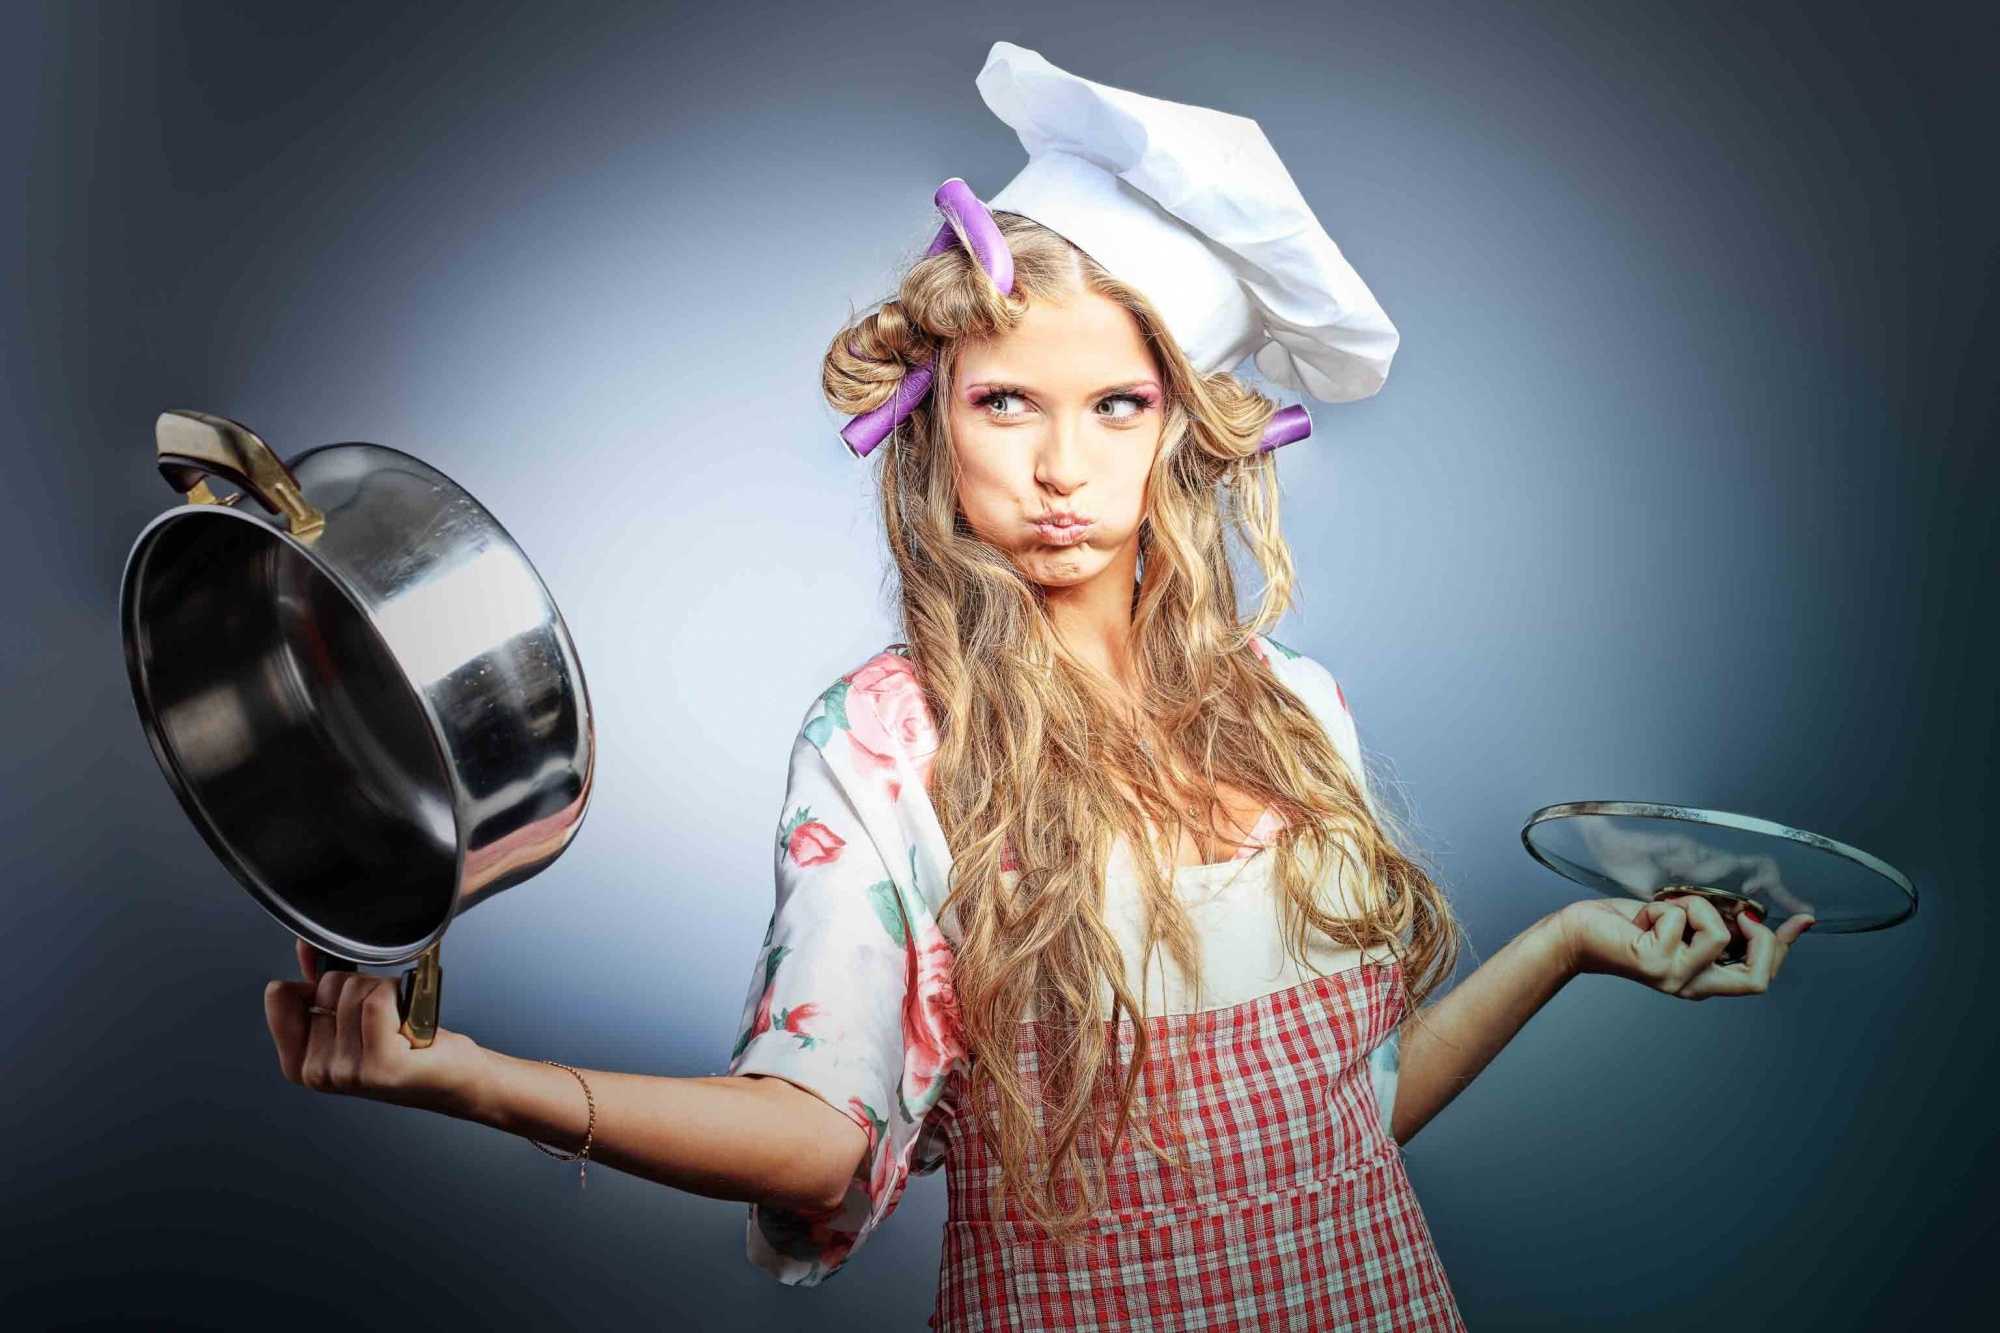 Пою и готовлю. Девушка с кастрюлей. Девушка повар. Домохозяйка на кухне. Женщина на кухне.